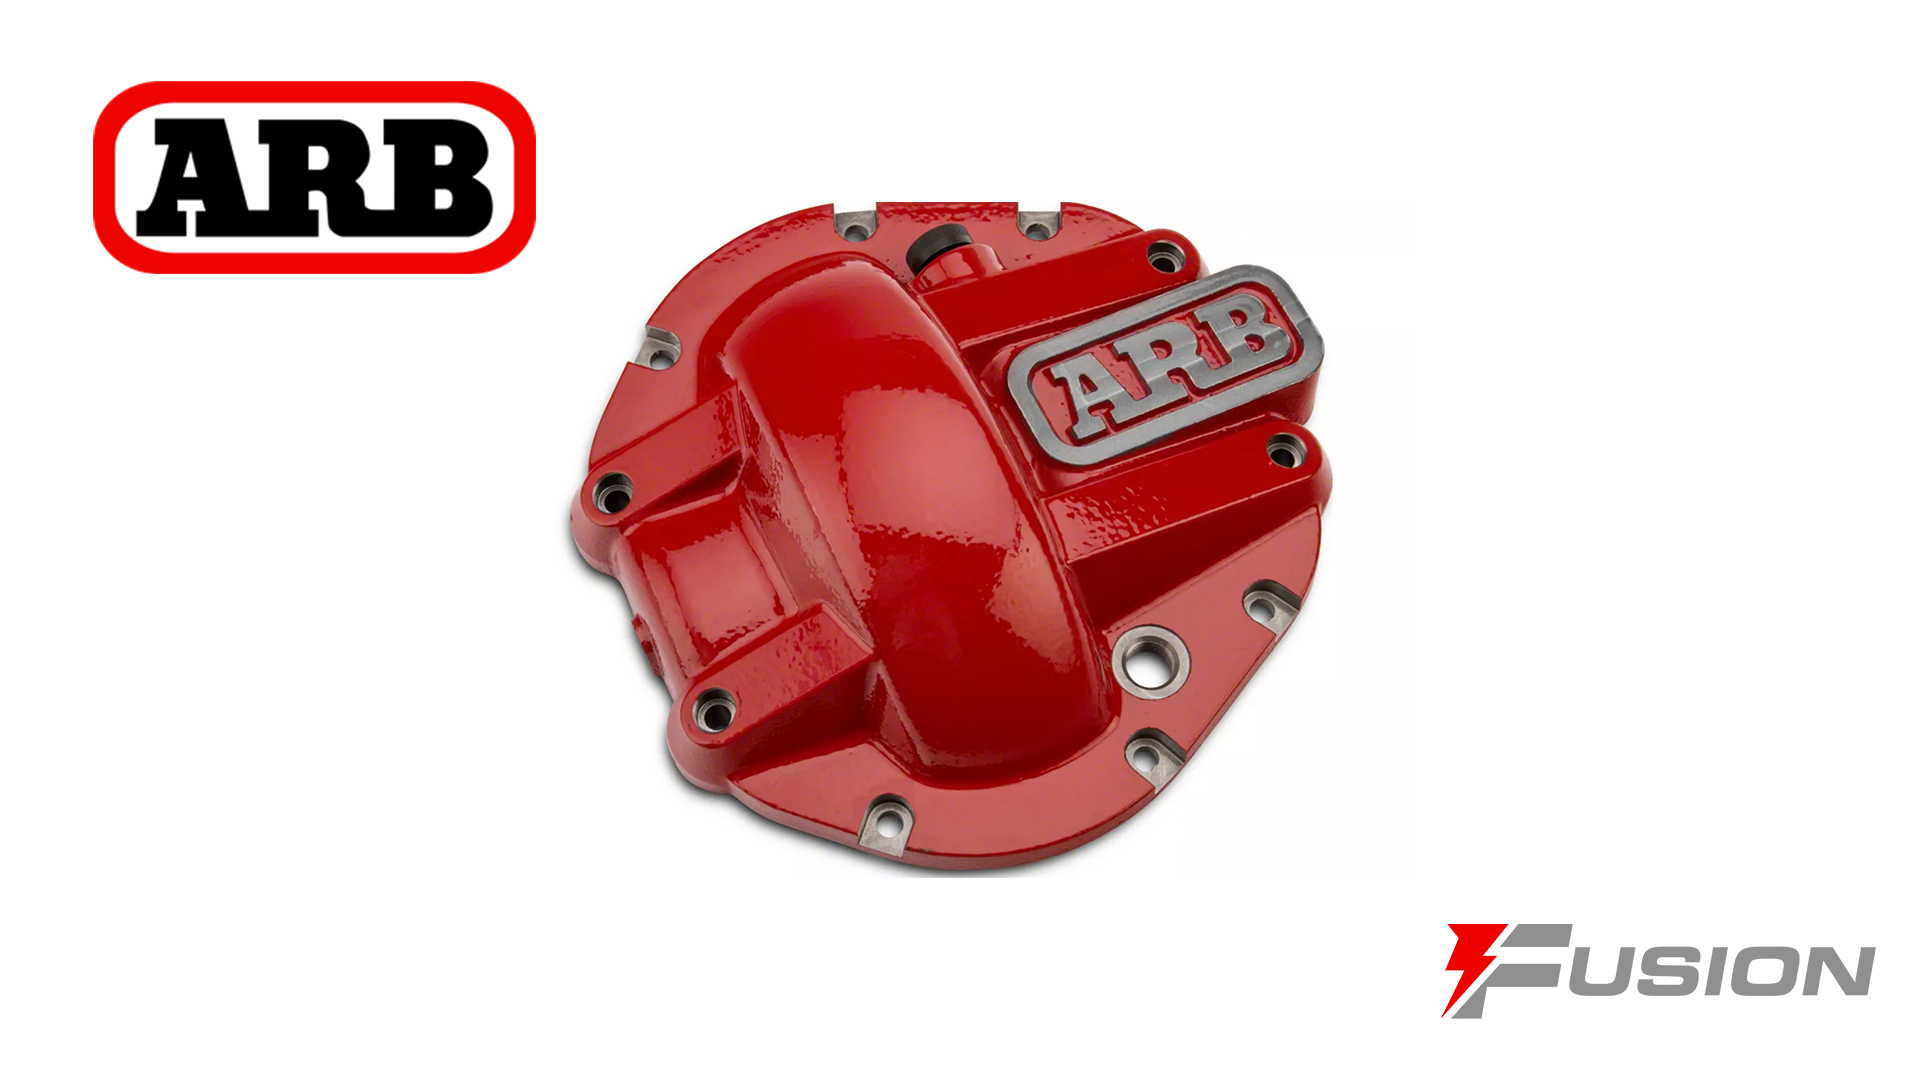 Dana 60/70 Diff Cover - ARB Red - fusion4x4